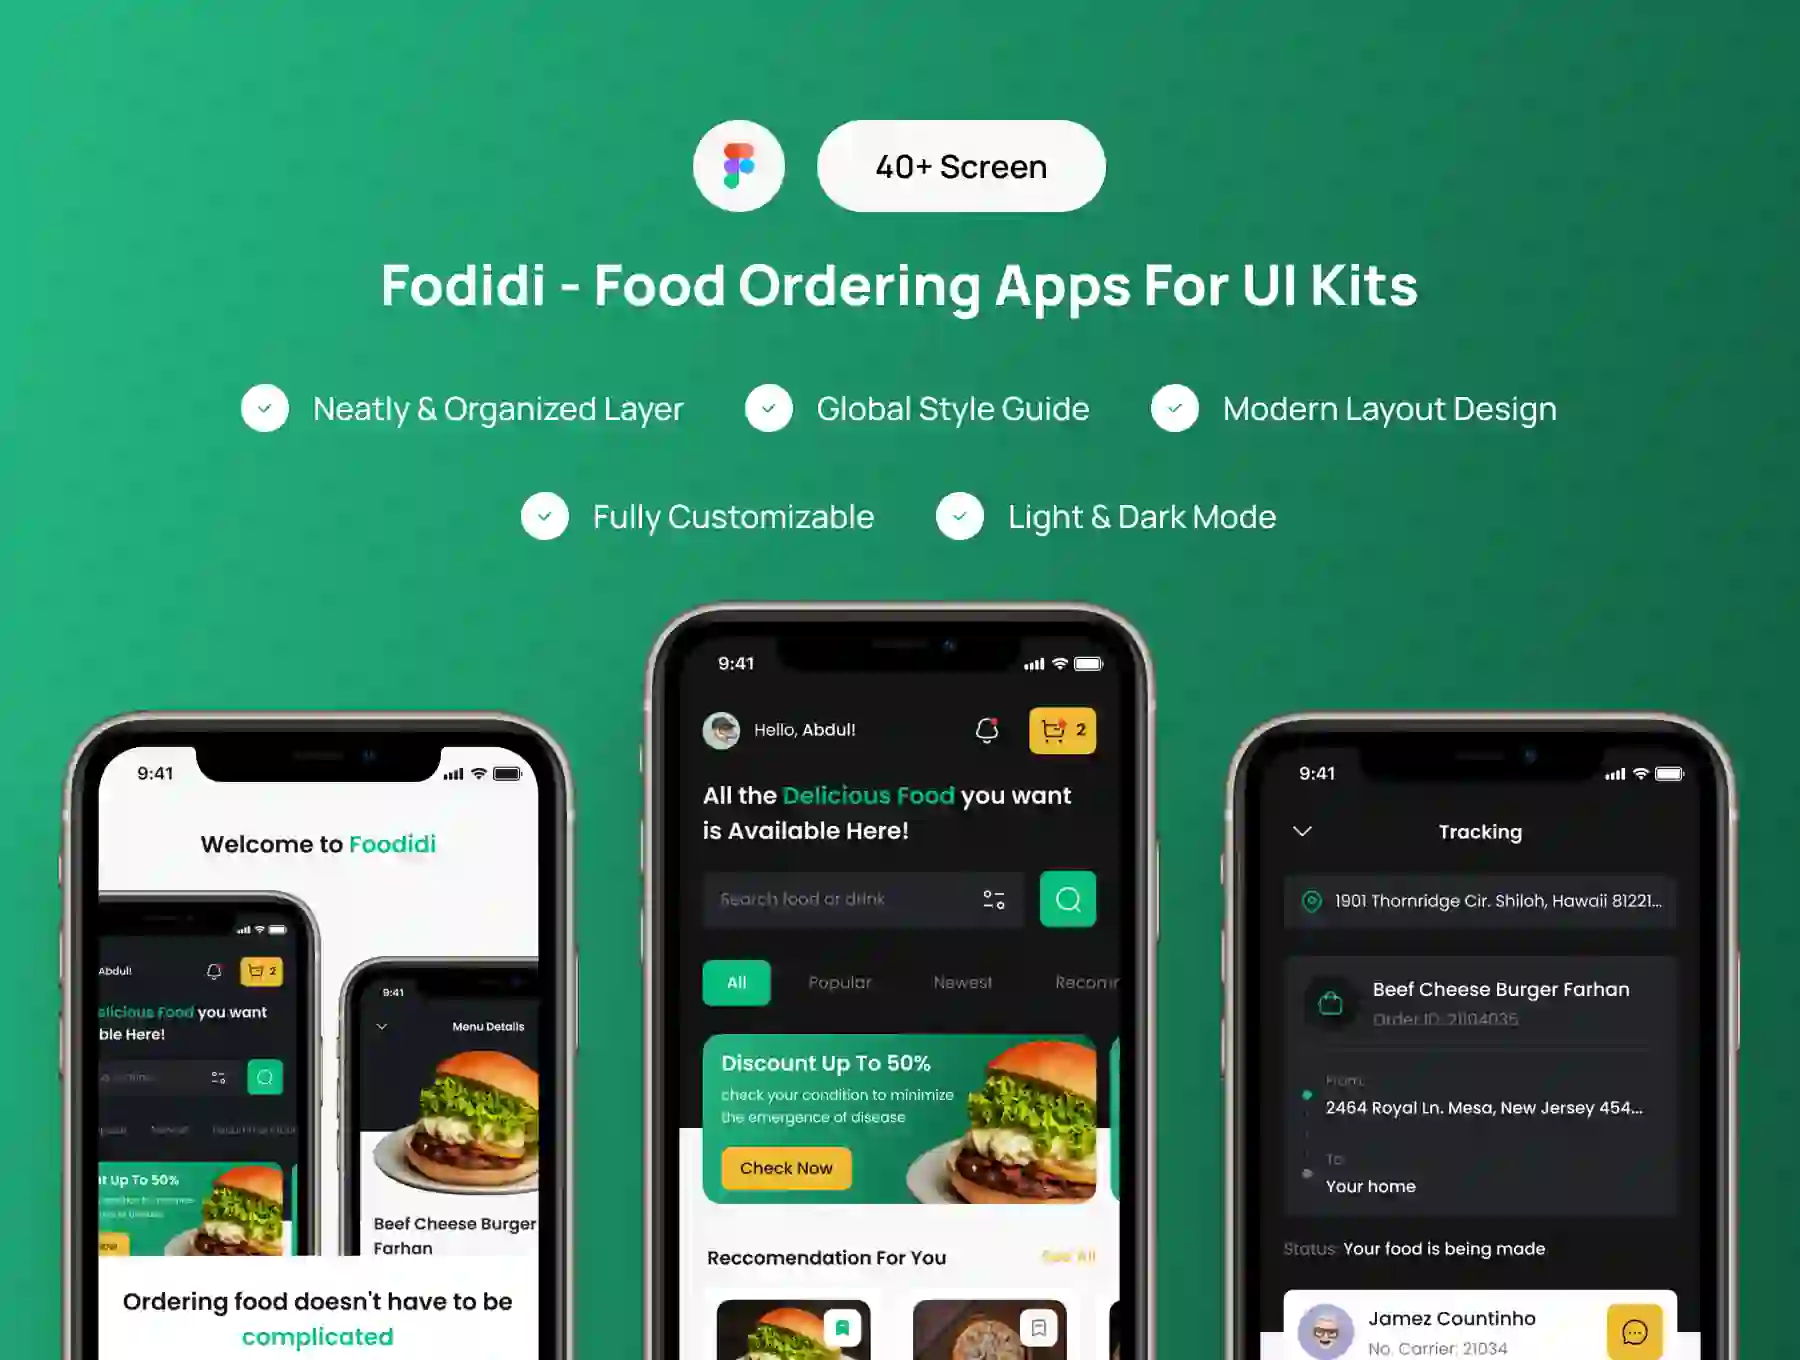 Fodidi - Food Ordering Apps For UI Kits